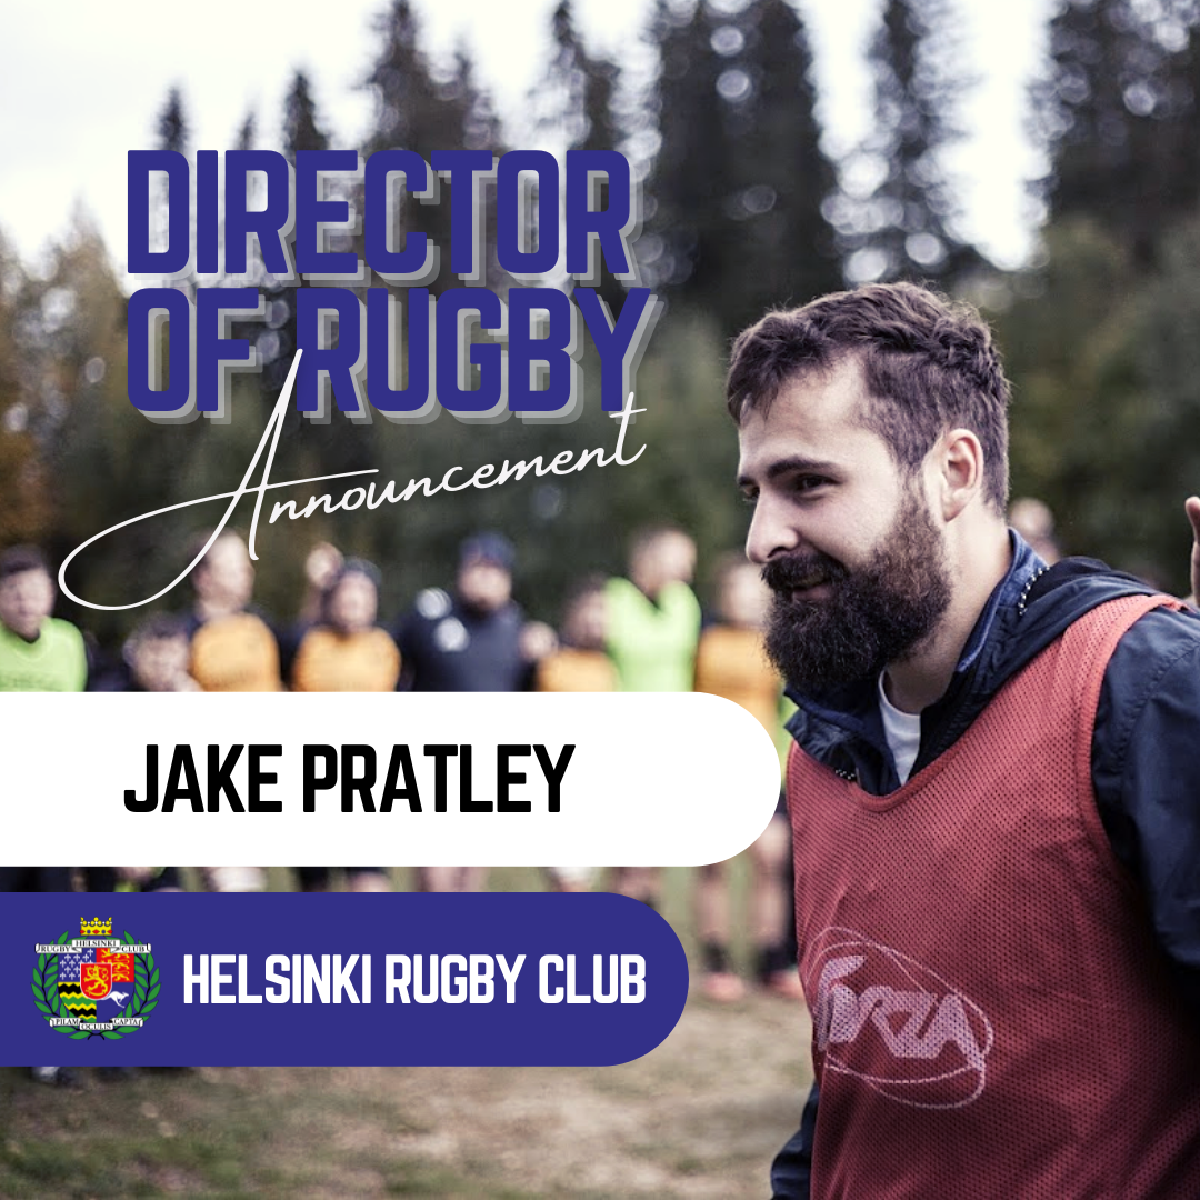 Helsinki Rugby Club names Jake Pratley as its Director of Rugby